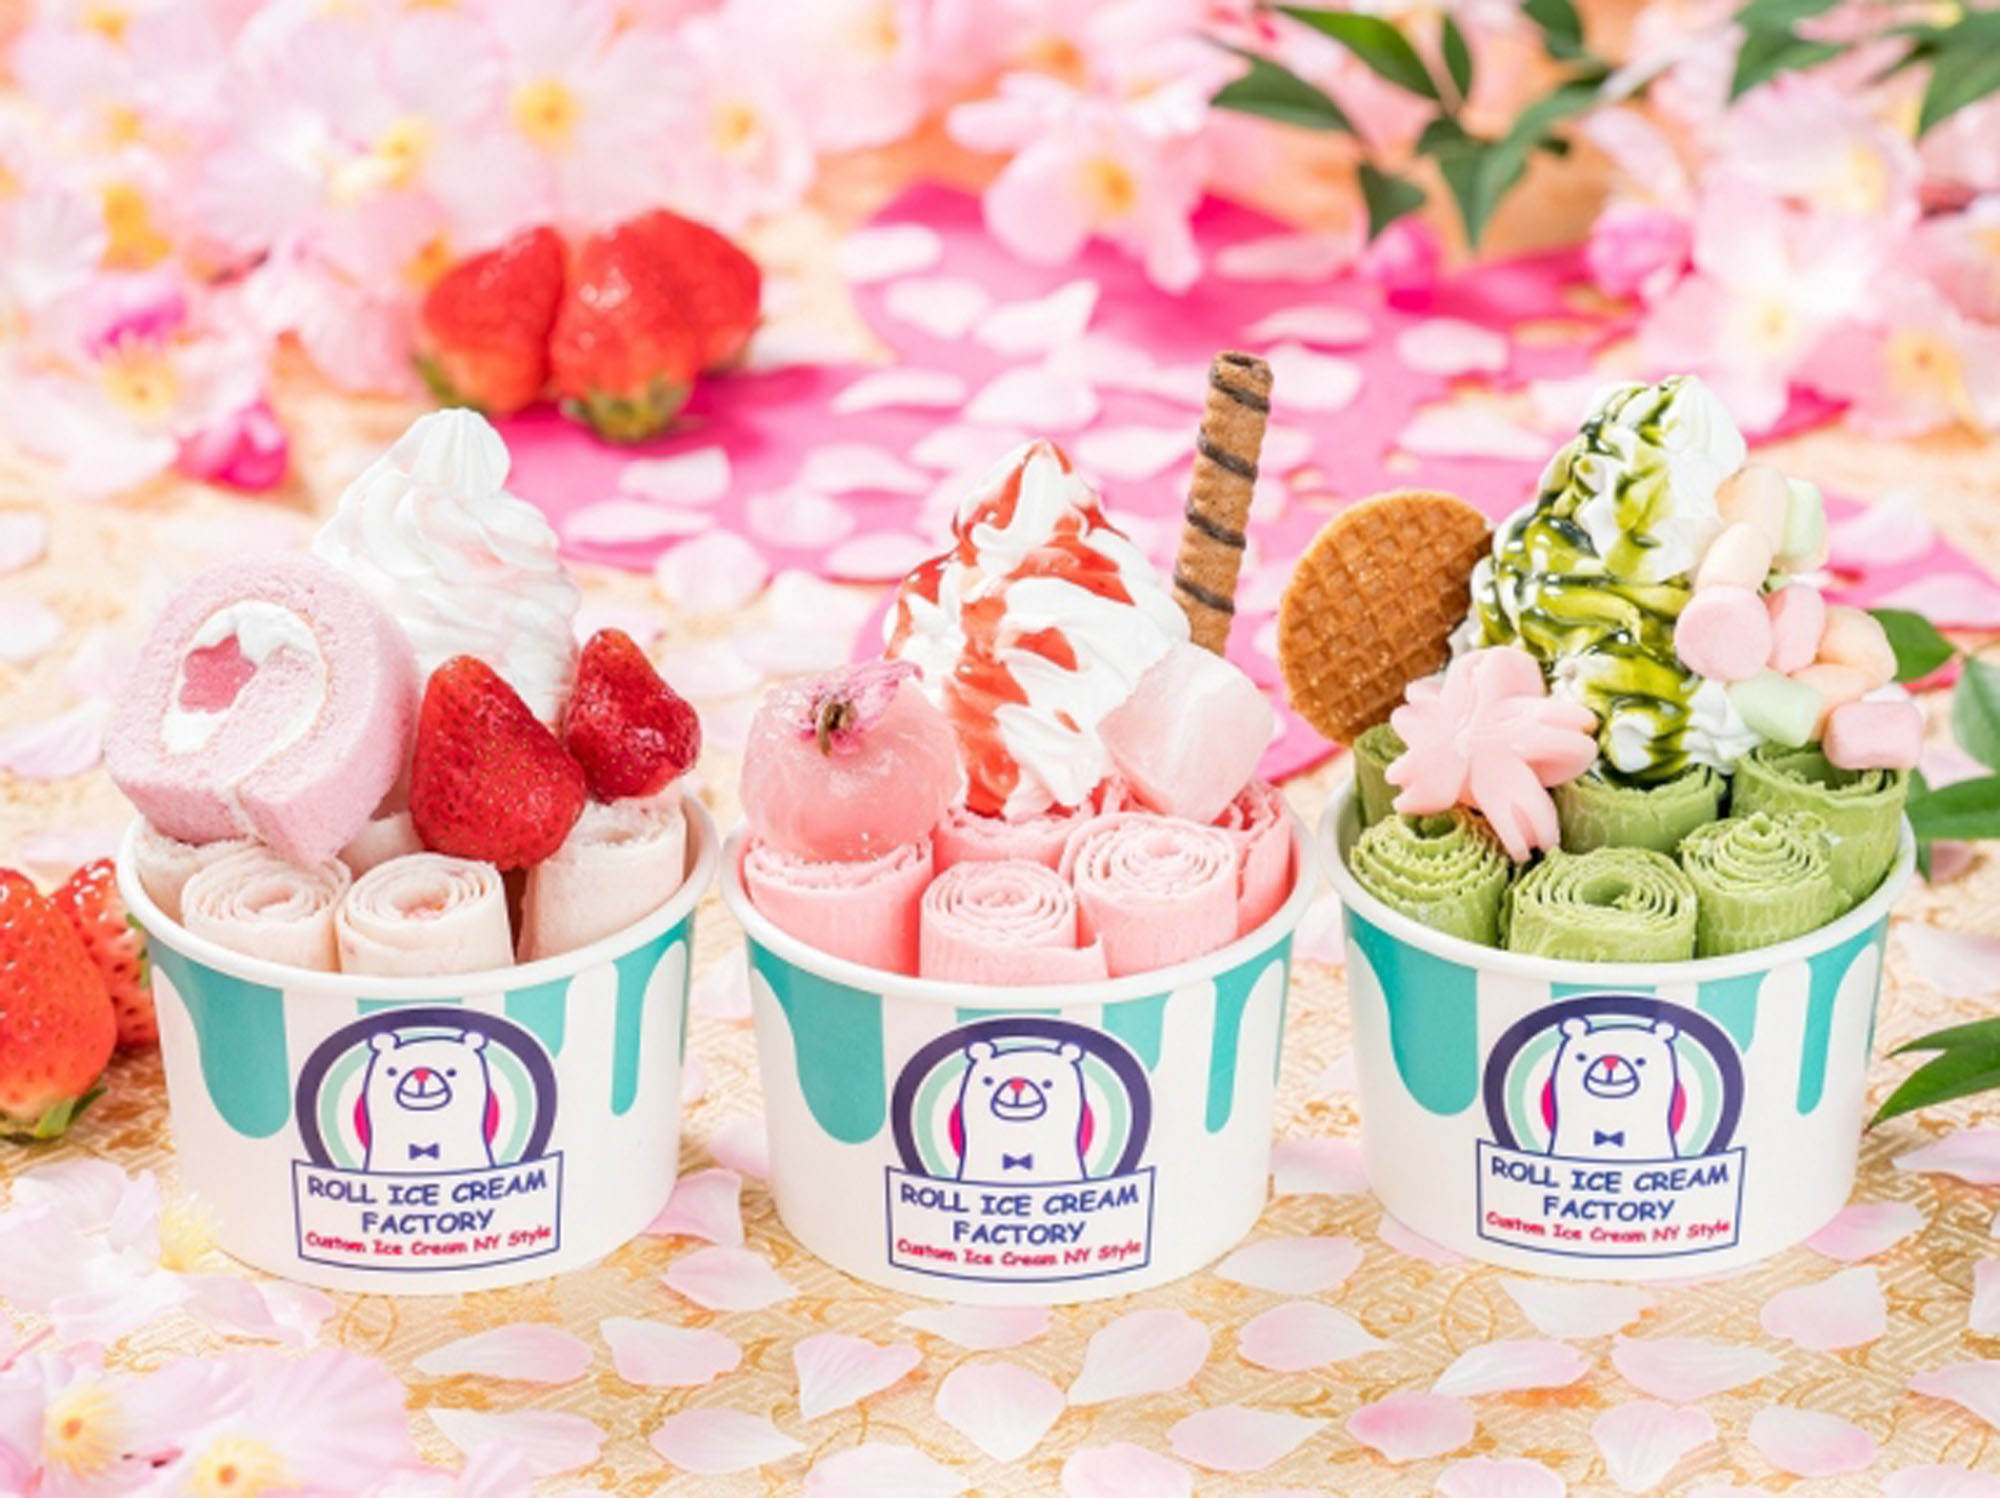 Ice roll. Ice Cream Roll. Тайское мороженое. Тайское ролл мороженое. Roll Ice Cream Factory.